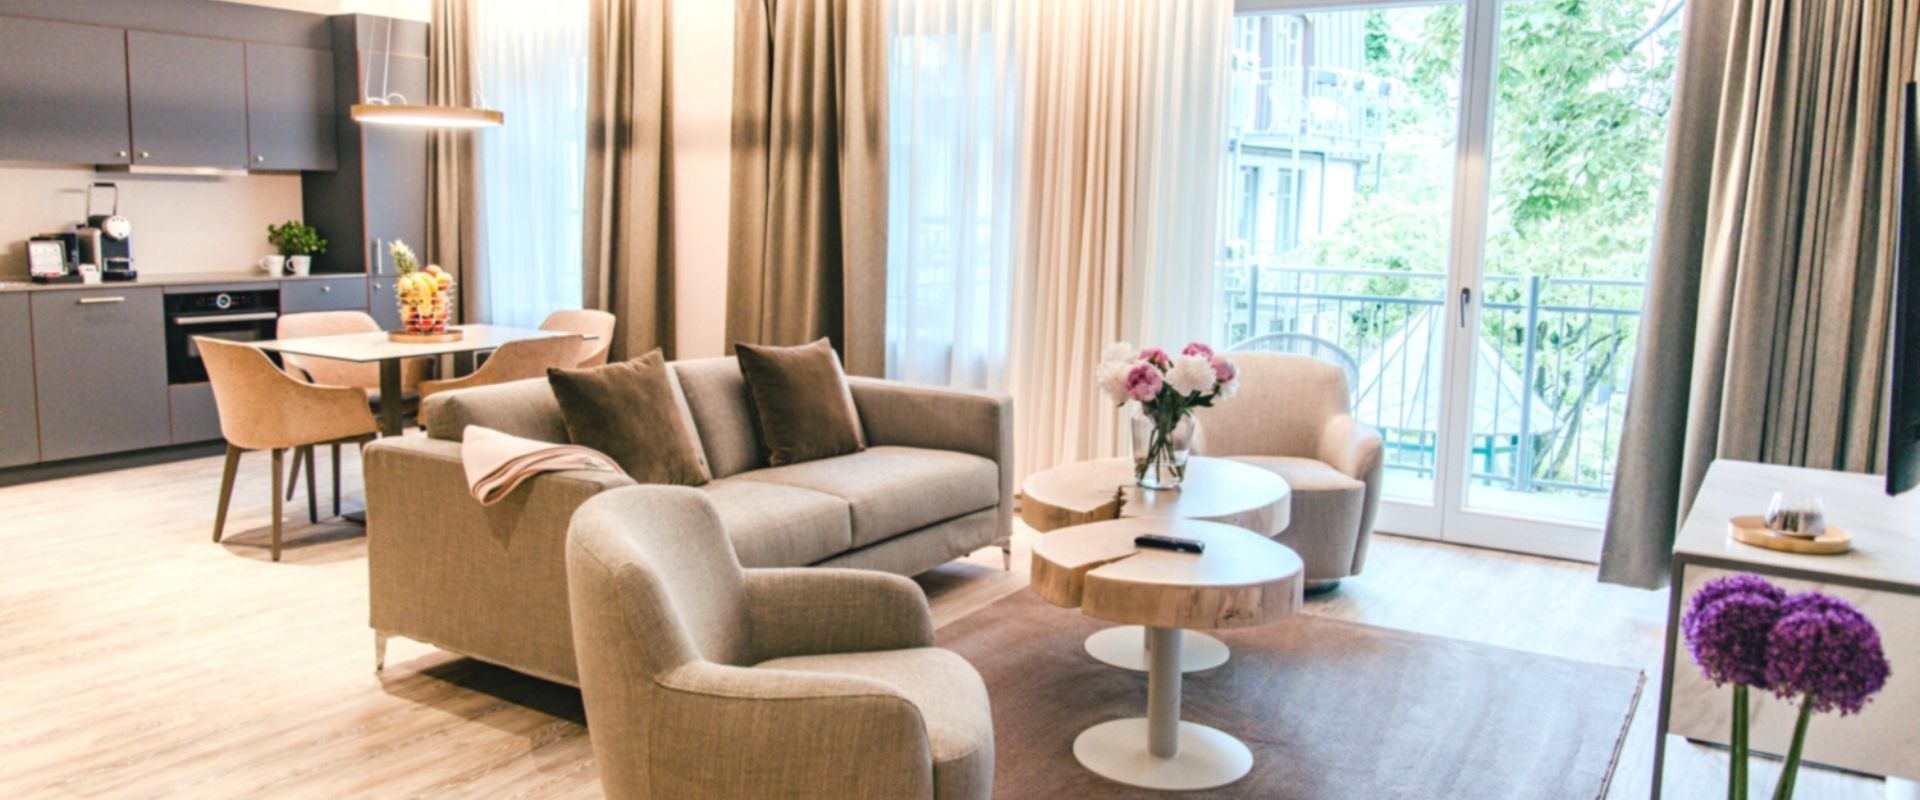 Luxury Suites im Maximilian Munich Hotel Apartment München